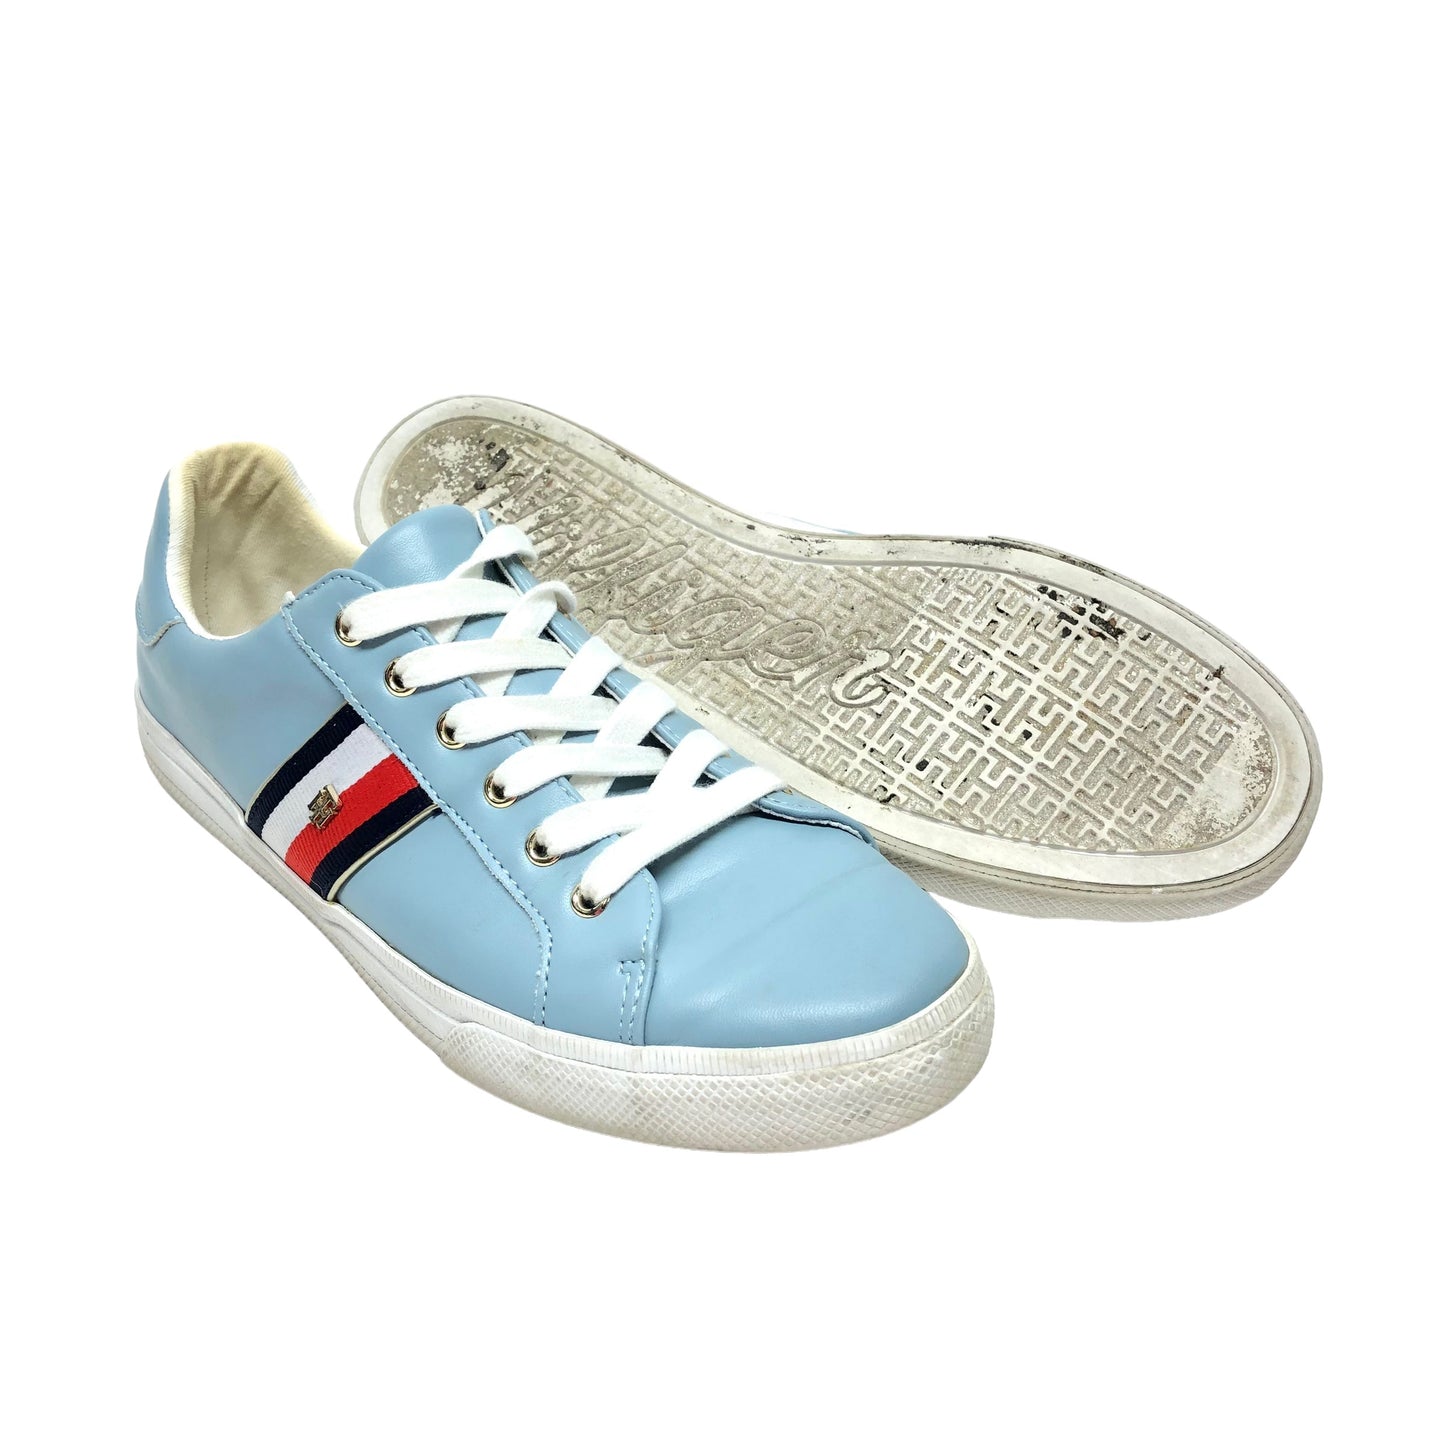 Blue Shoes Flats Tommy Hilfiger, Size 10